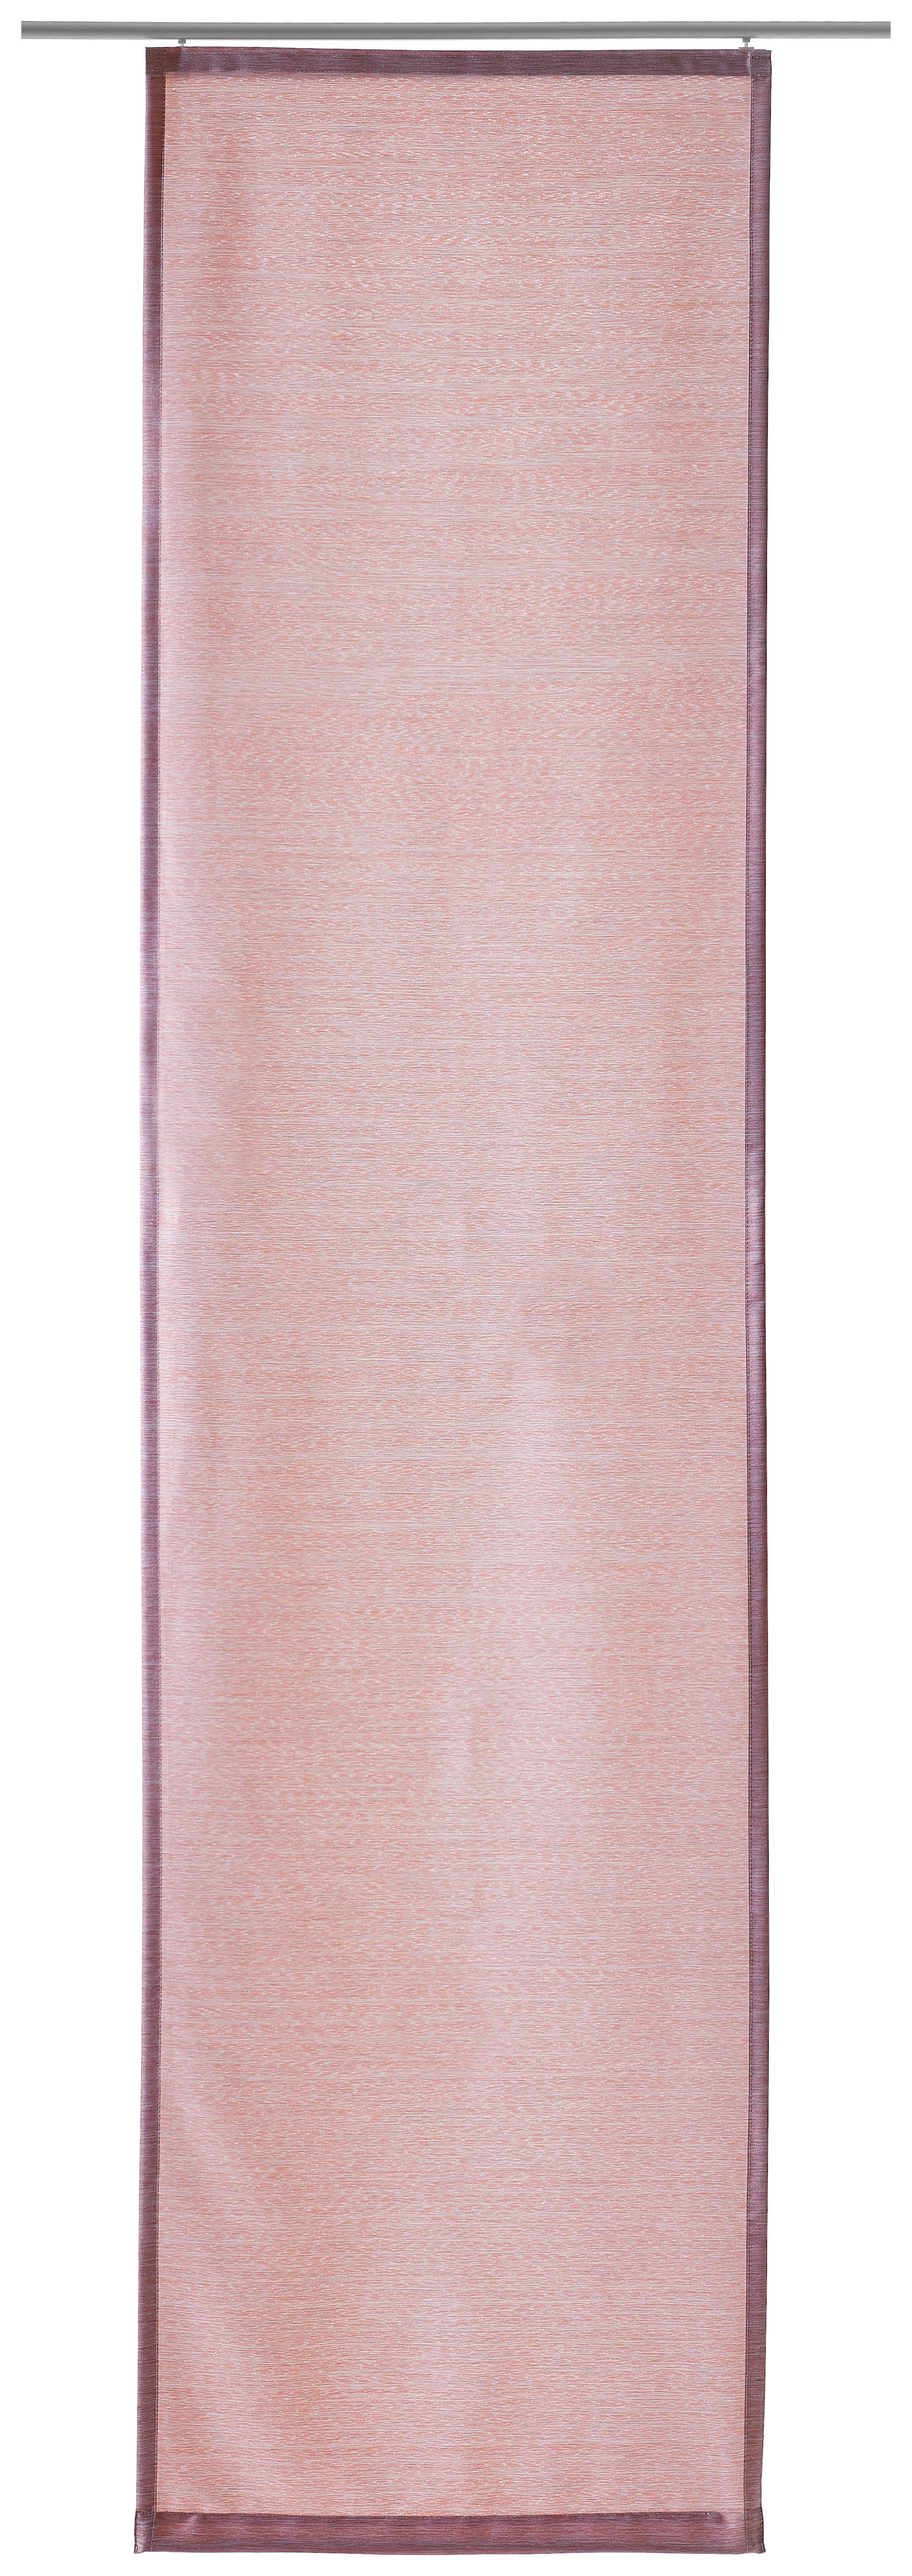 FLÄCHENVORHANG   halbtransparent   60/245 cm  - Terra cotta, Basics, Textil (60/245cm) - Esposa